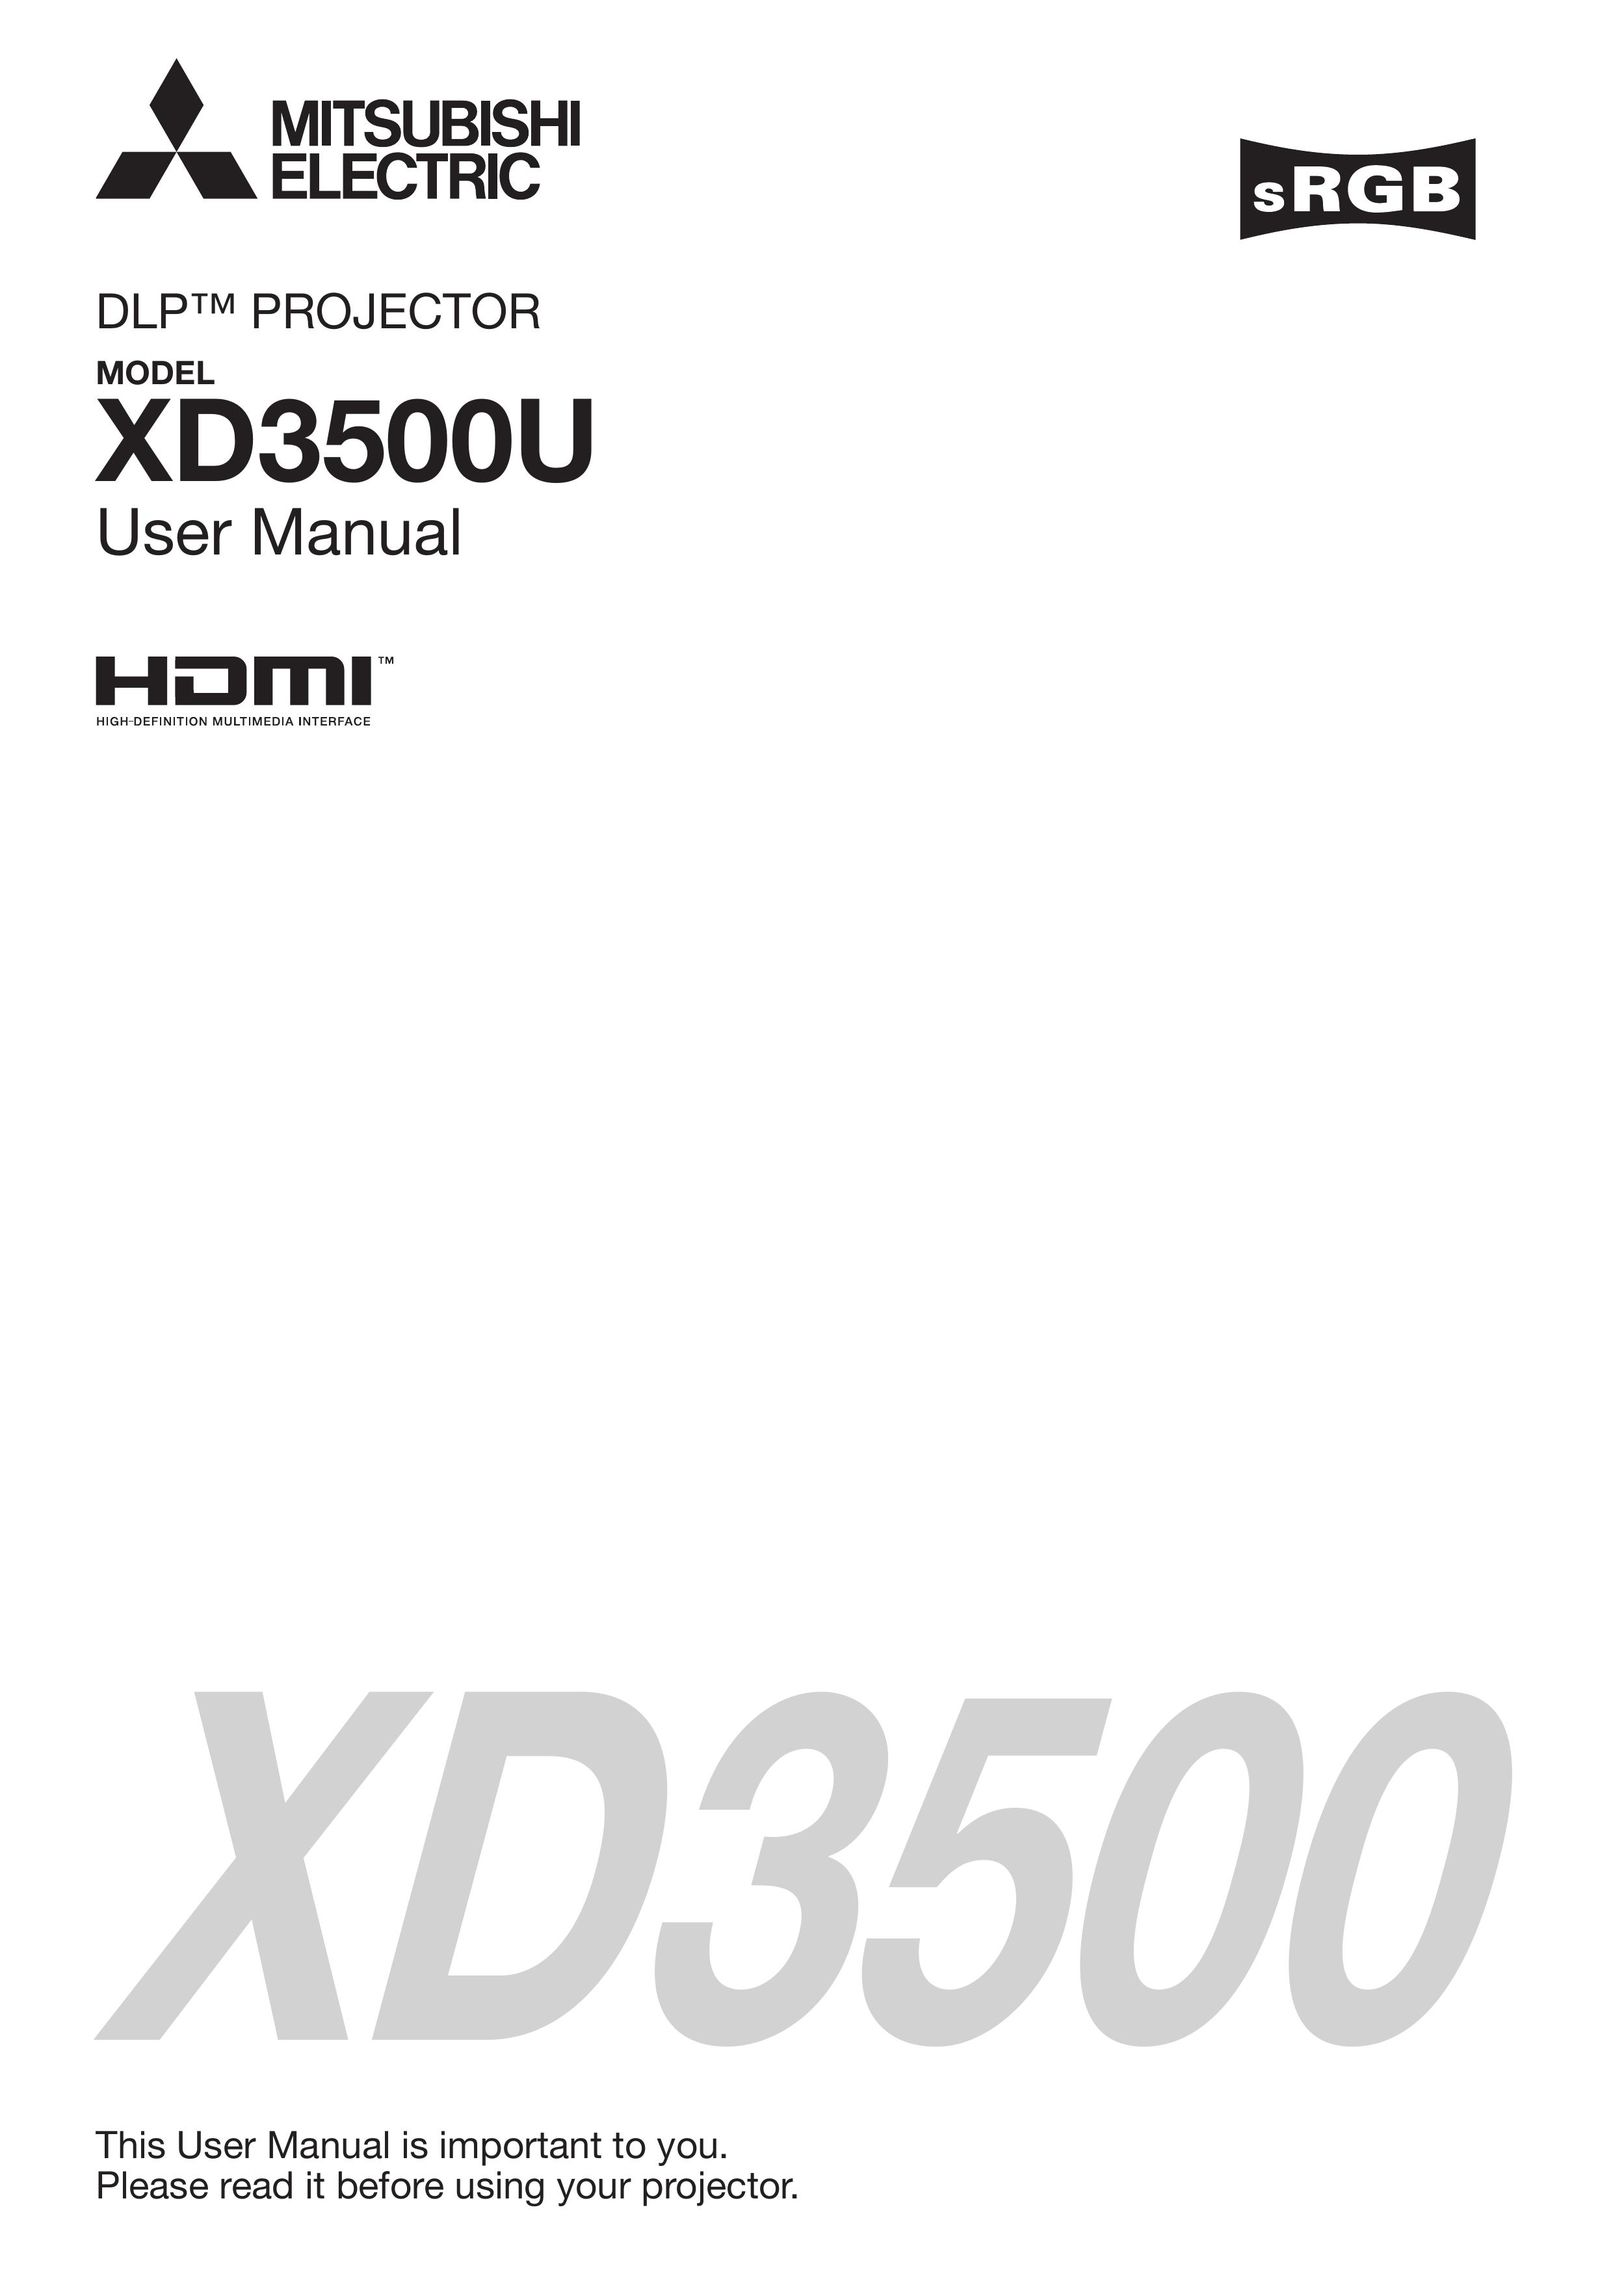 Mitsumi electronic XD3500U Projector User Manual